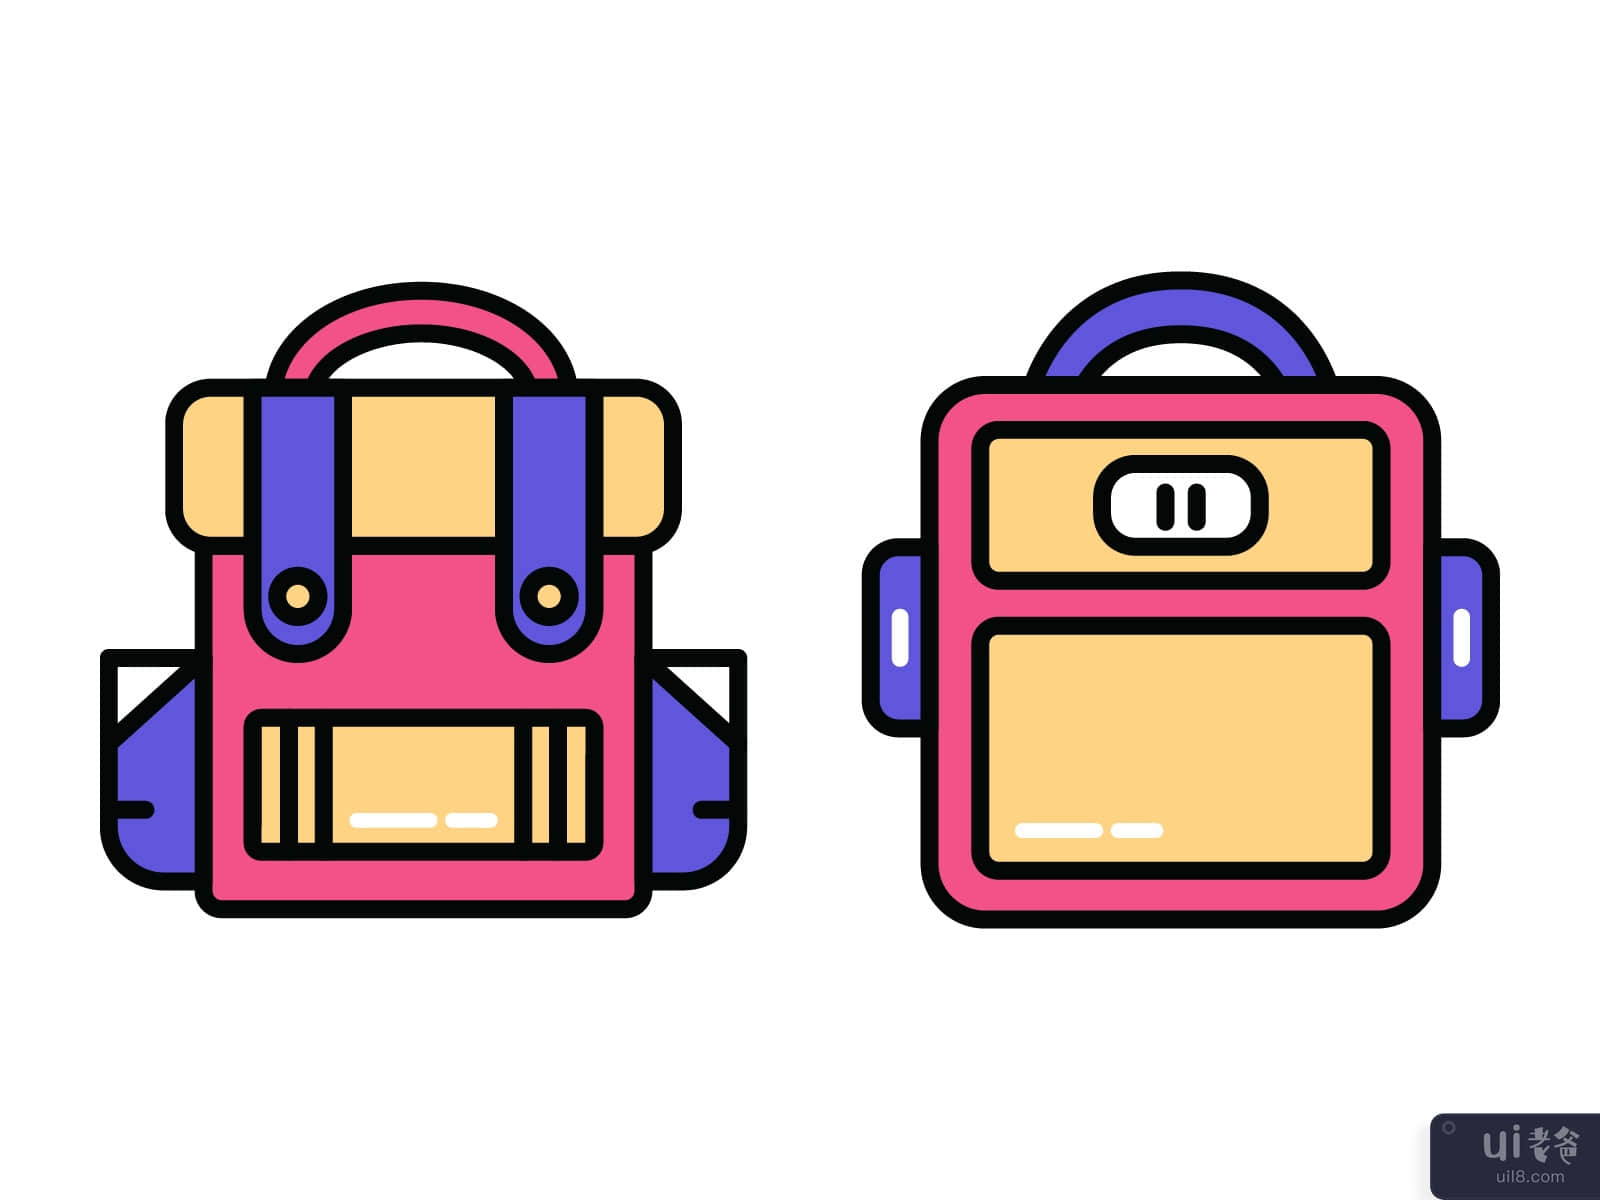 Two school bag icon